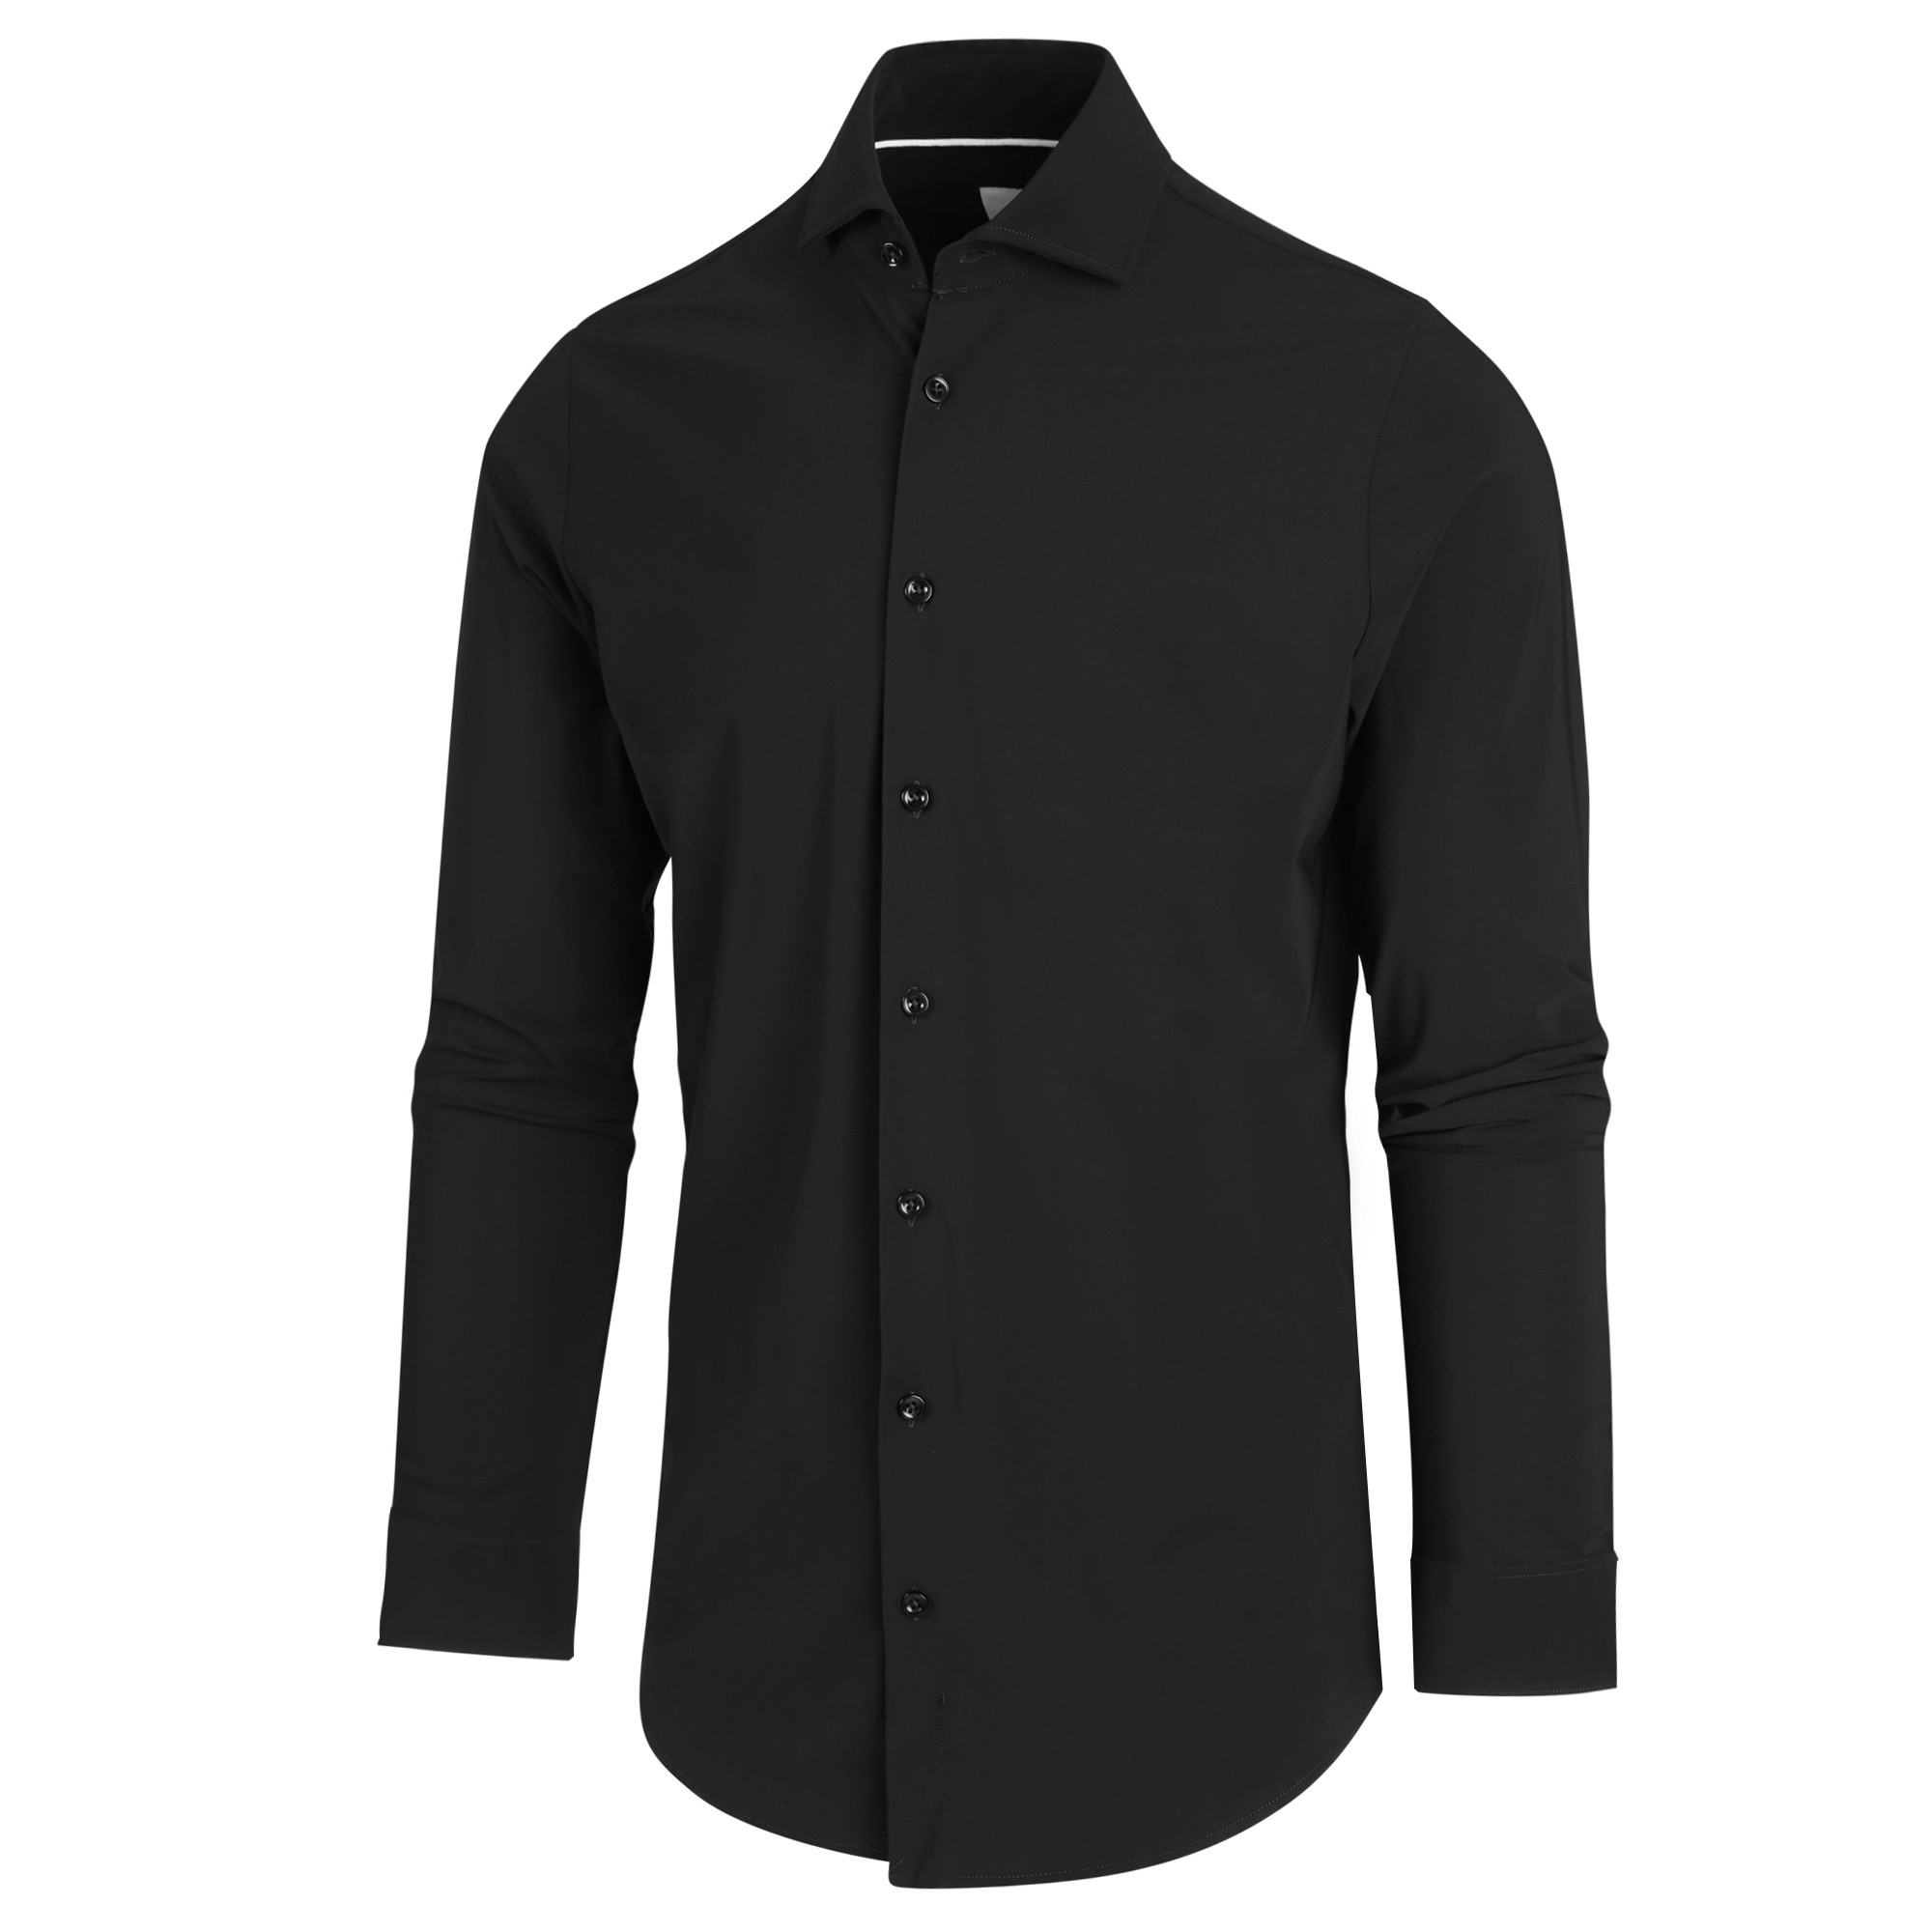 Afbeelding van Blue Industry 2191.22 shirt black